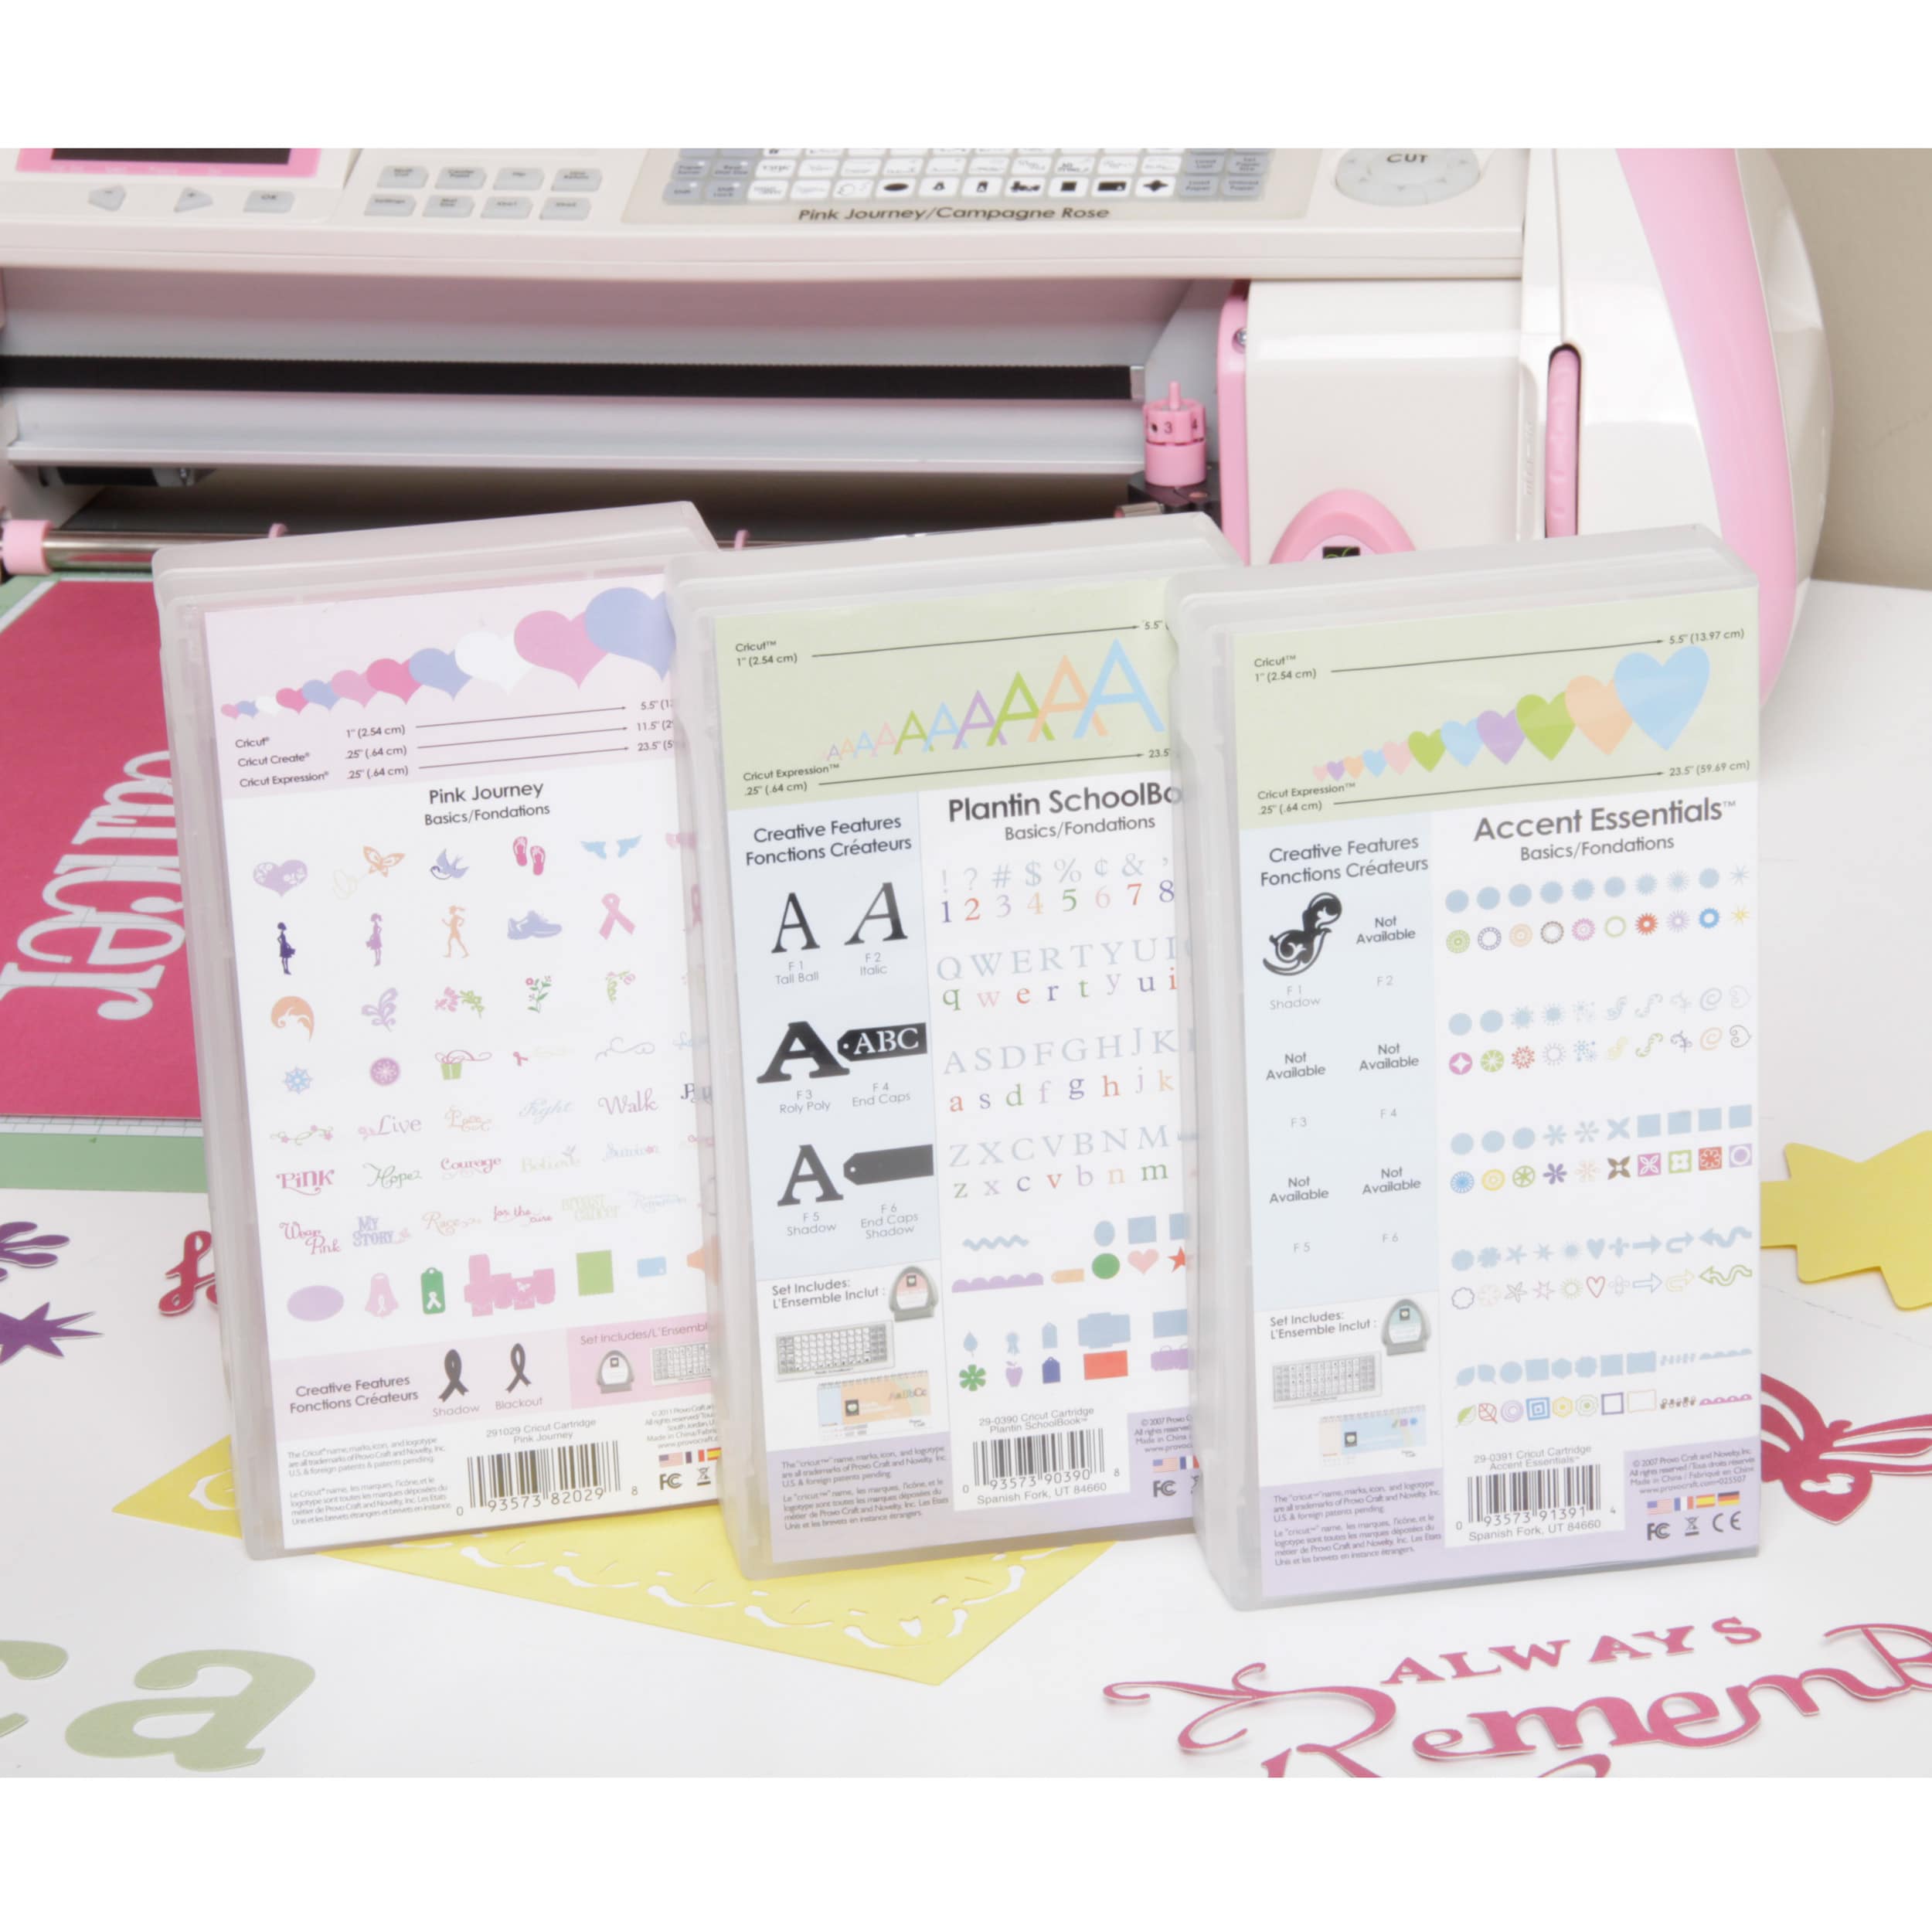 Pink Cricut Expression Bundle includes the Pink Journey - Cricut Cartridge  Library